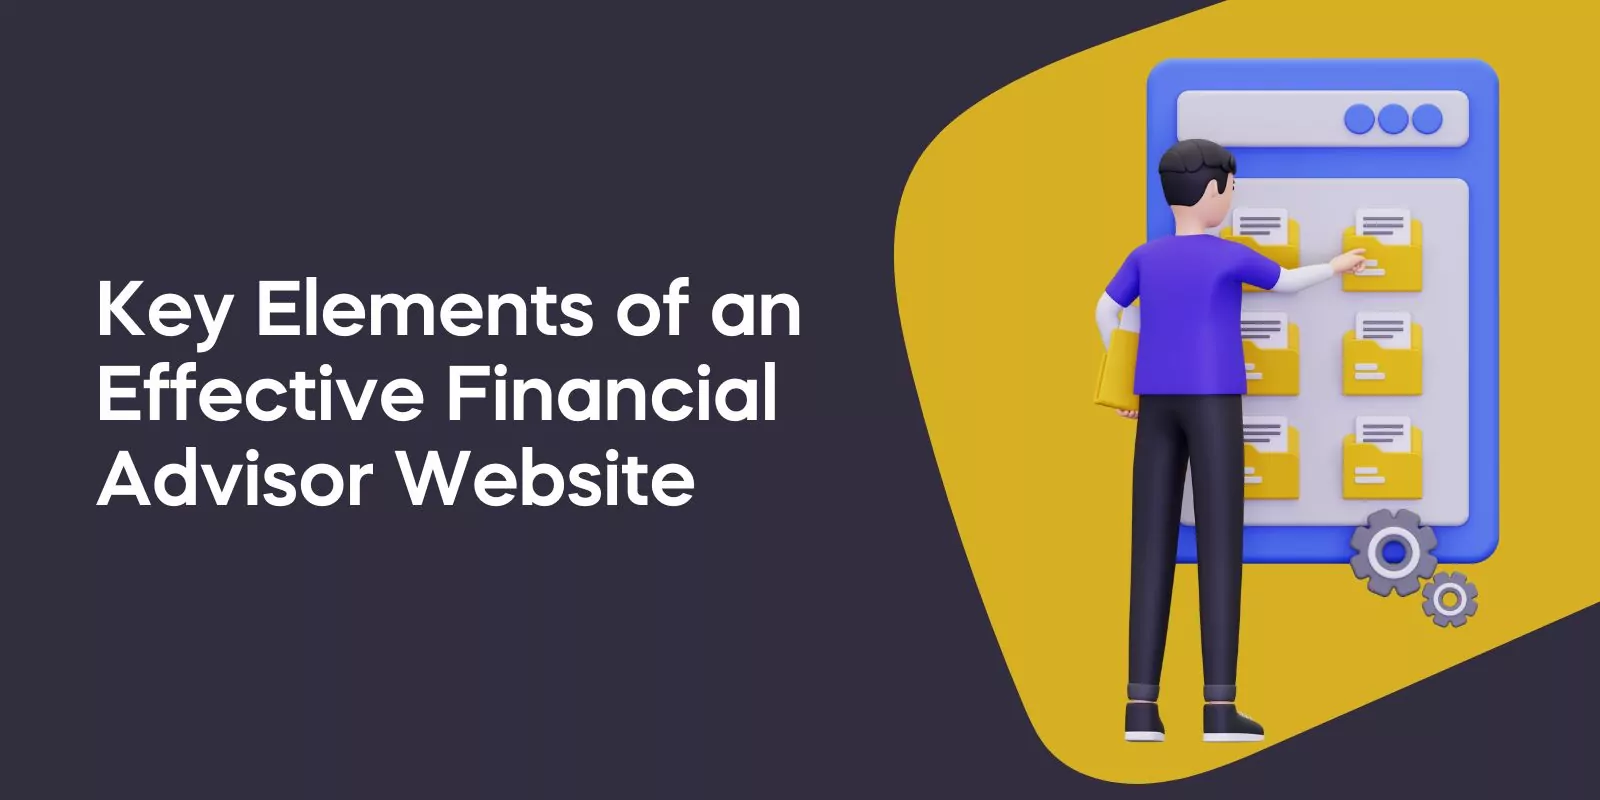 Key Elements of an Effective Financial Advisor Website